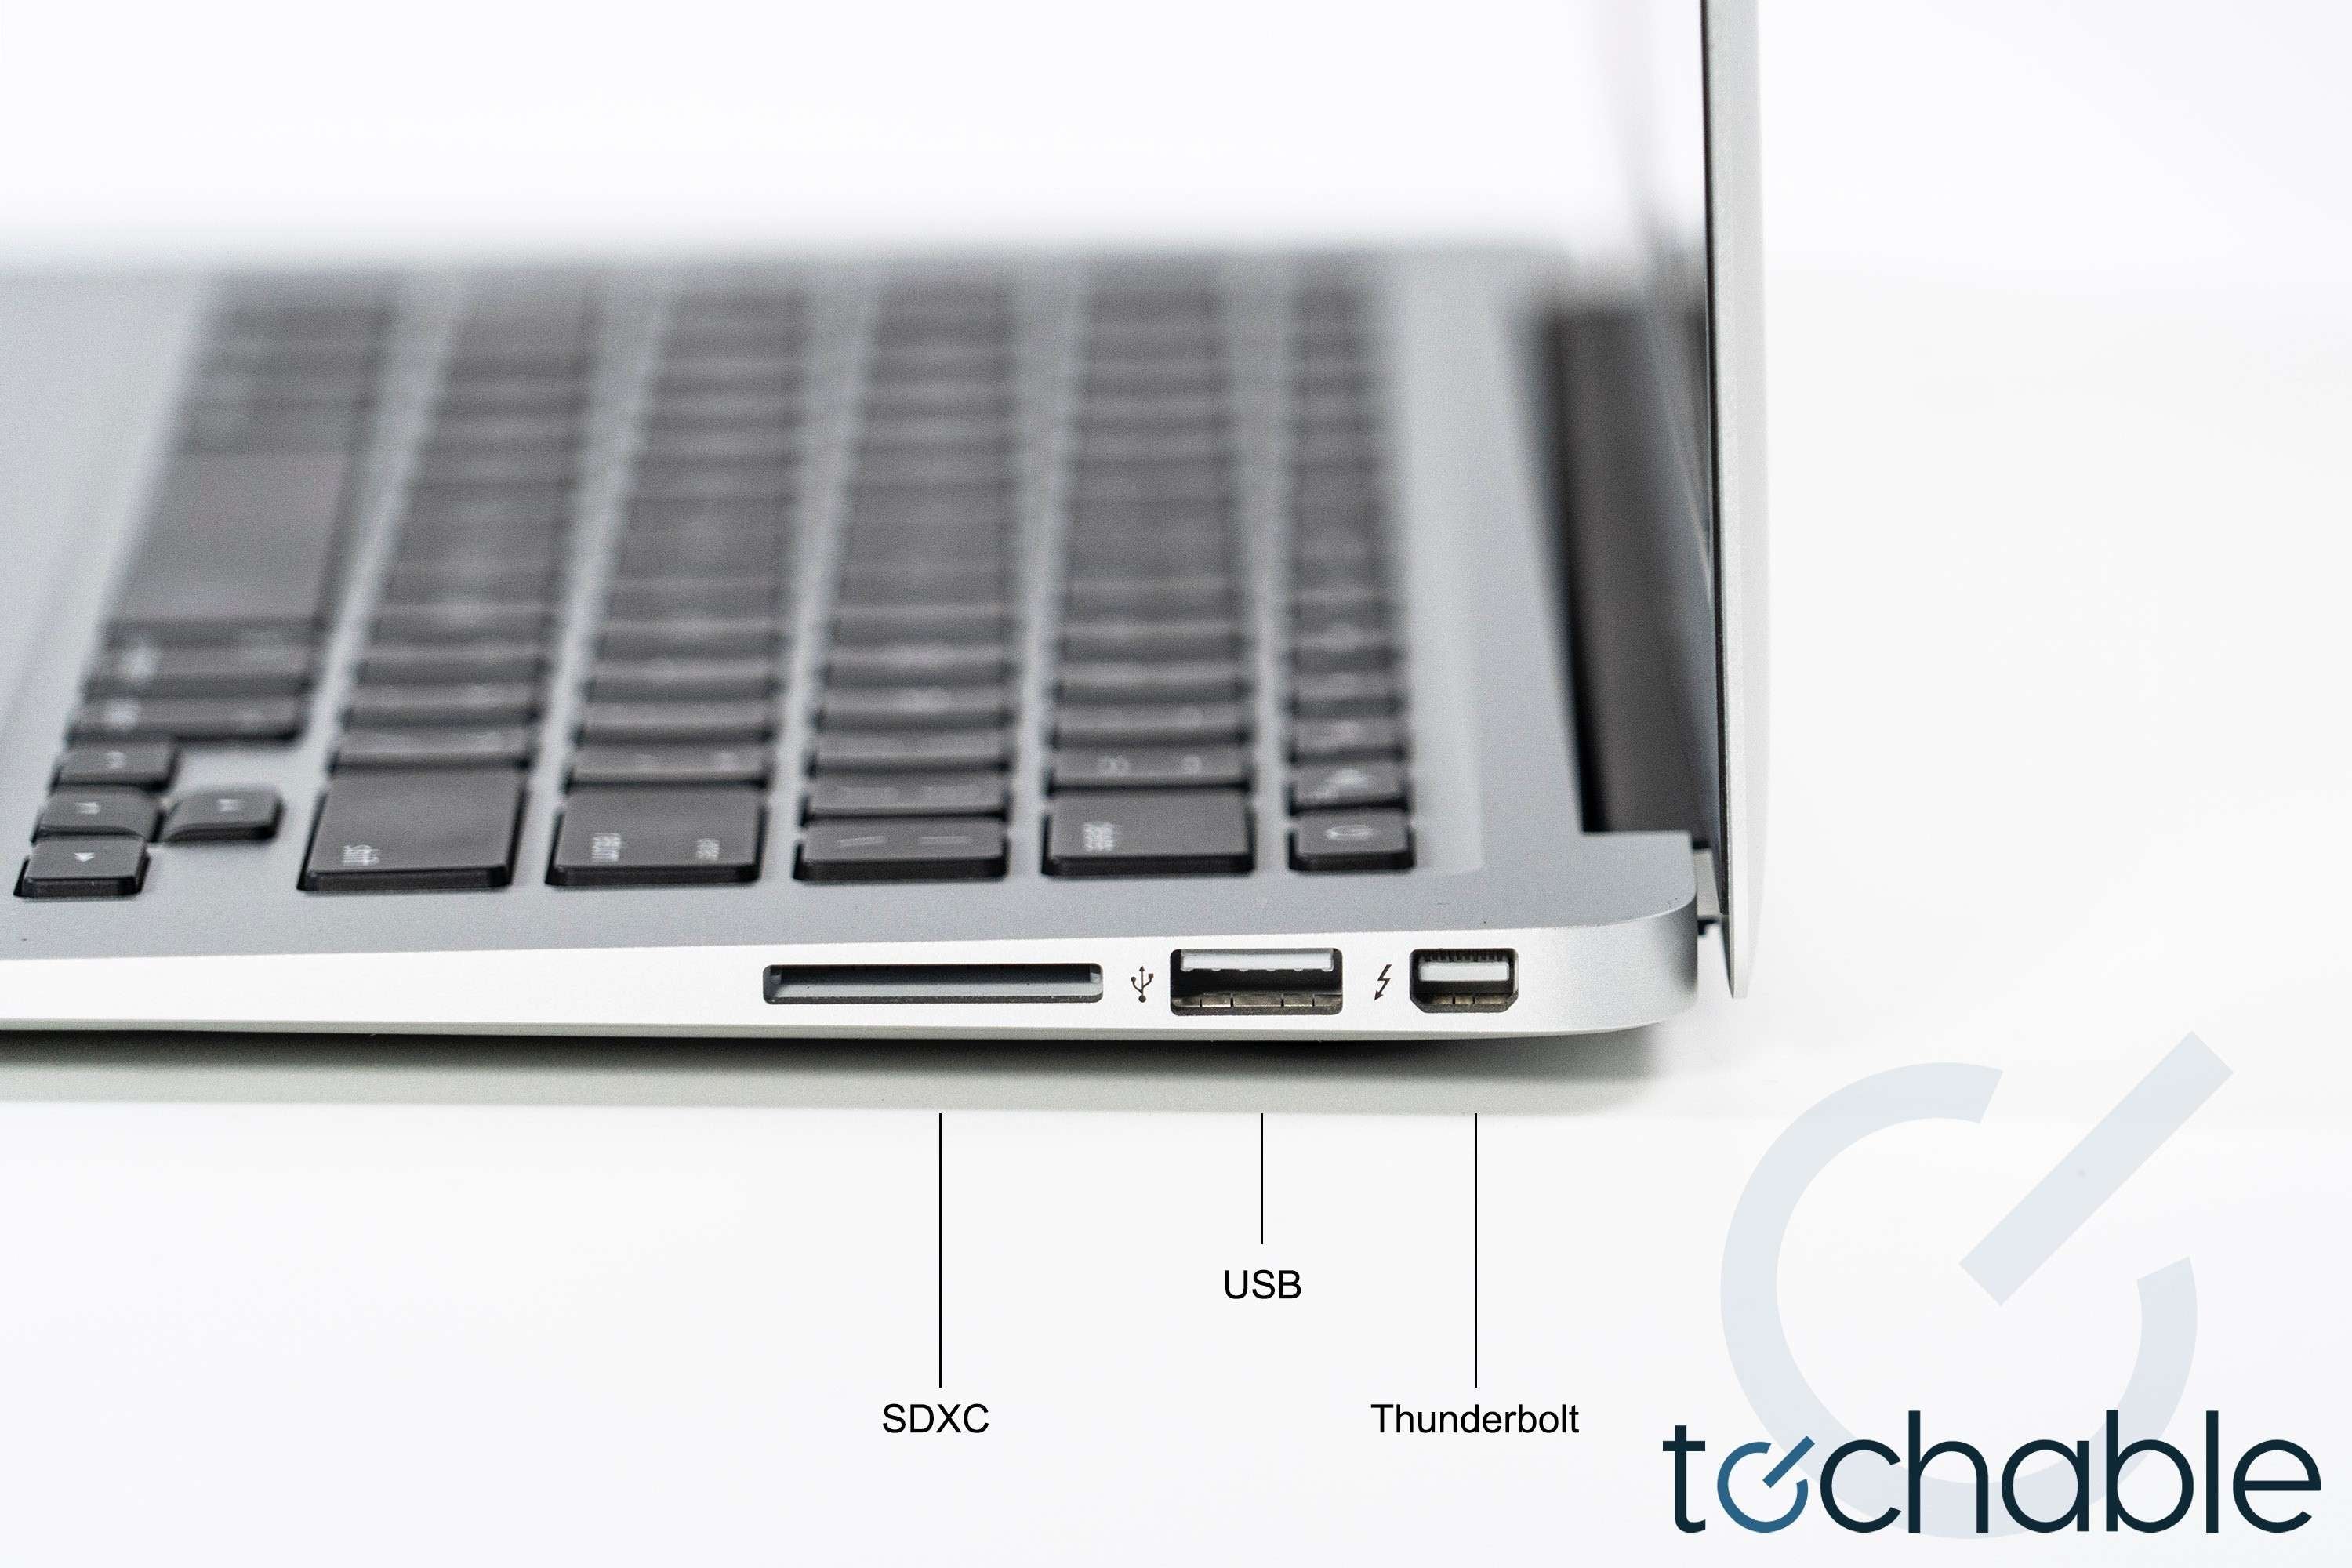 Apple MacBook Air 13-inch (Early 2015) 1.6GHz Core i5 4GB RAM MJVE2LL/A*